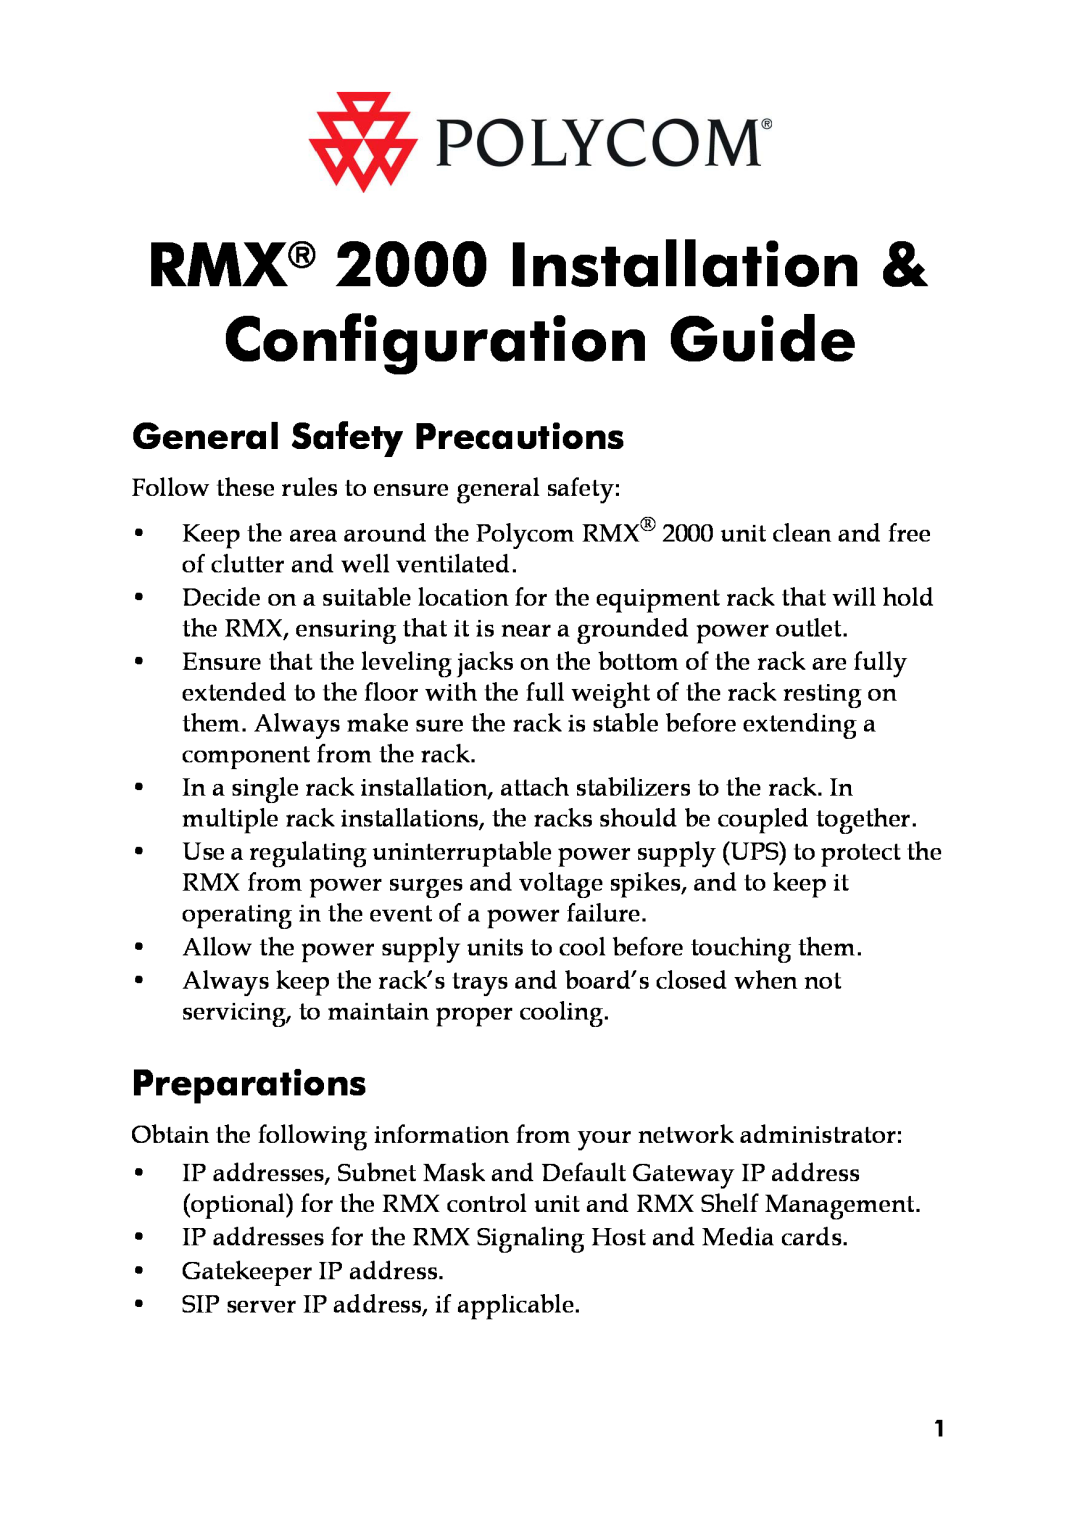 Polycom DOC2563A manual General Safety Precautions, Preparations, RMX 2000 Installation Configuration Guide 